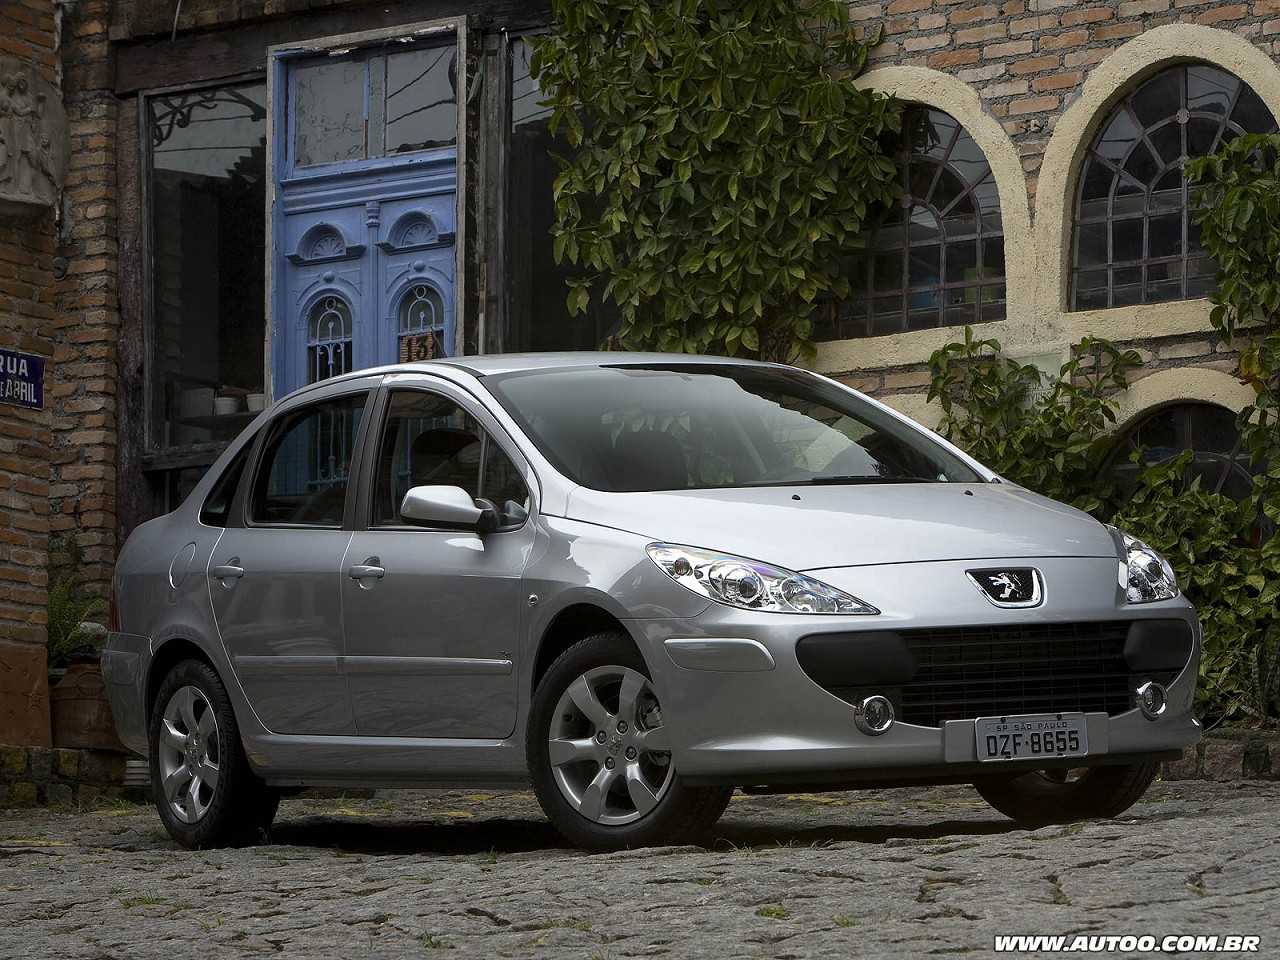 Peugeot307 Sedan 2010 - ngulo frontal